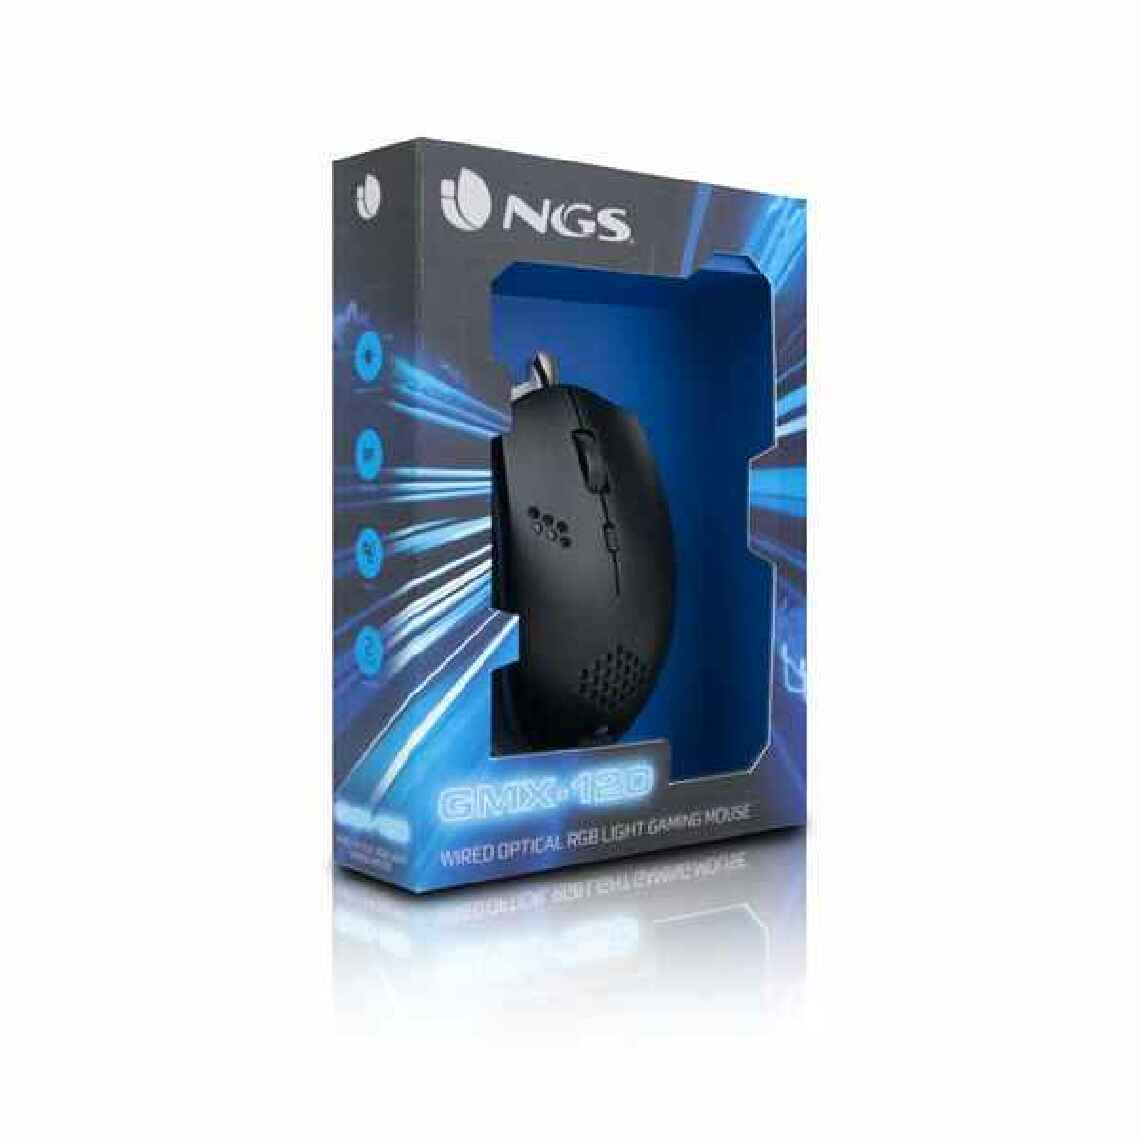 Ngs - Souris Gaming NGS GMX-120 800/1200 dpi Noir - Souris